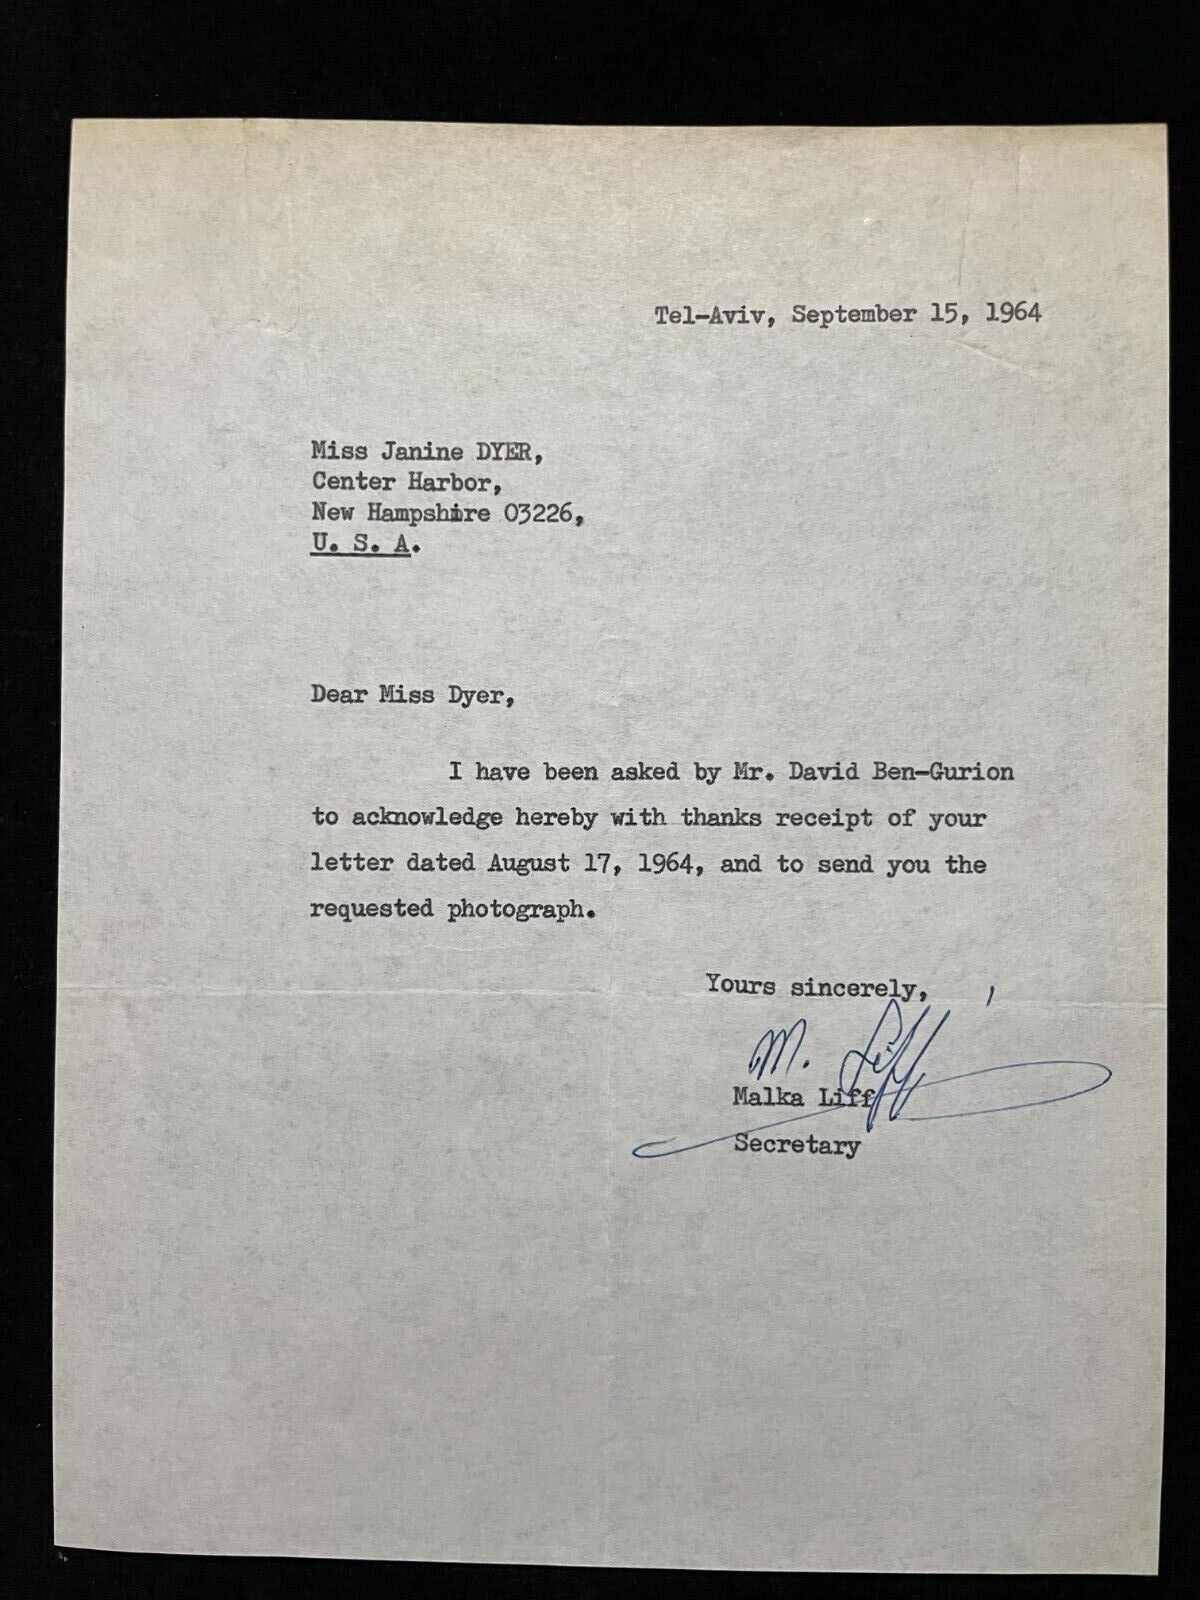 1964 Typed Letter Signed by David Ben-Gurion\'s Secretary - Malka Liff